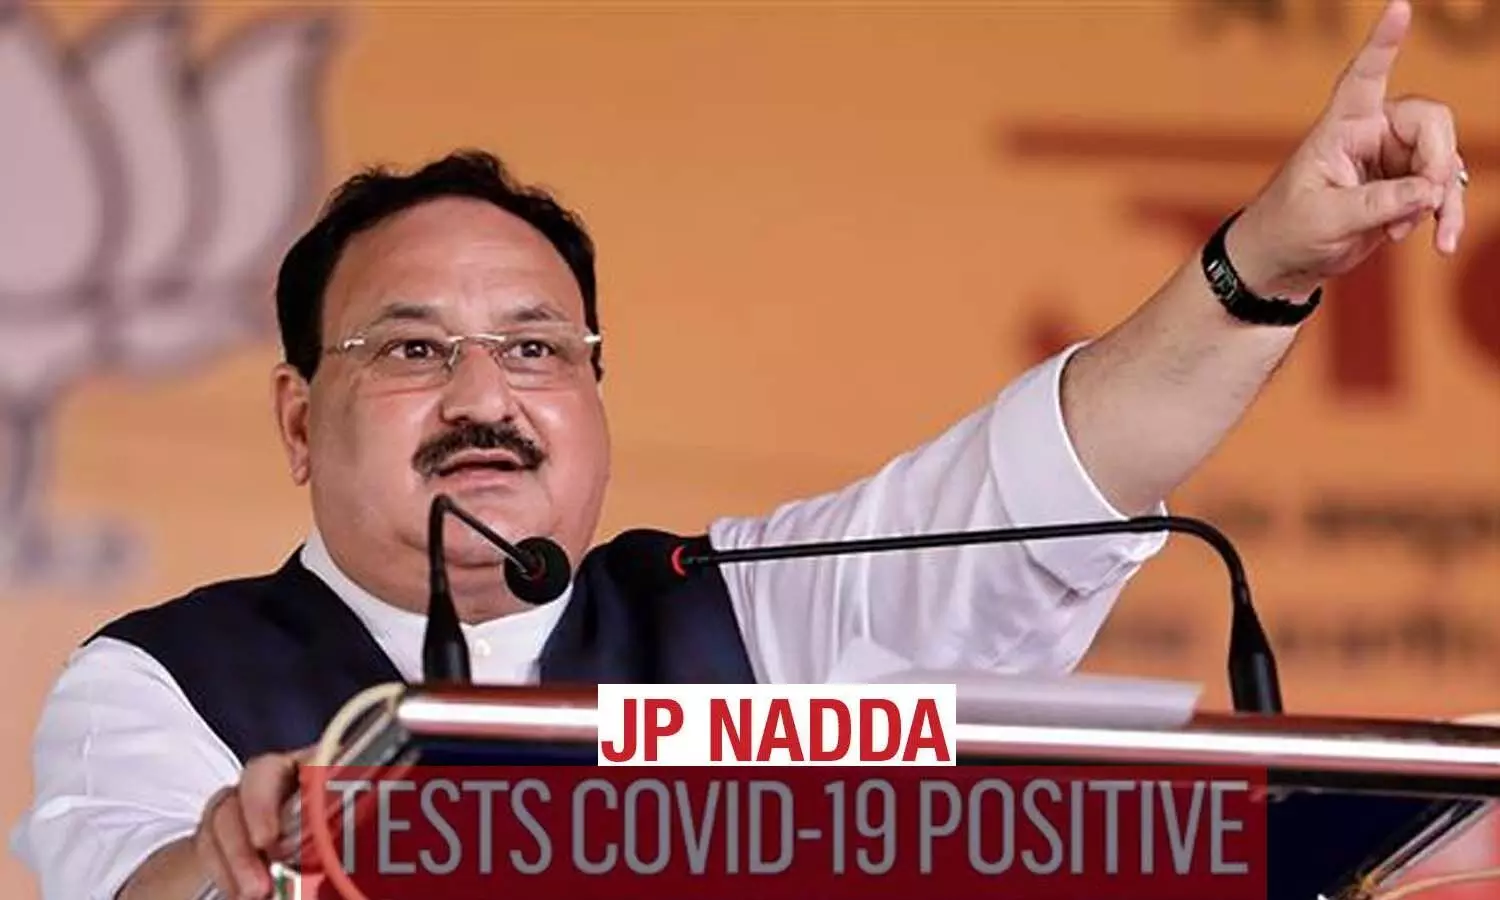 JP Nadda Corona Positive: भाजपा राष्ट्रीय अध्यक्ष जेपी नड्डा कोरोना संक्रमित, ट्वीट कर दी जानकारी